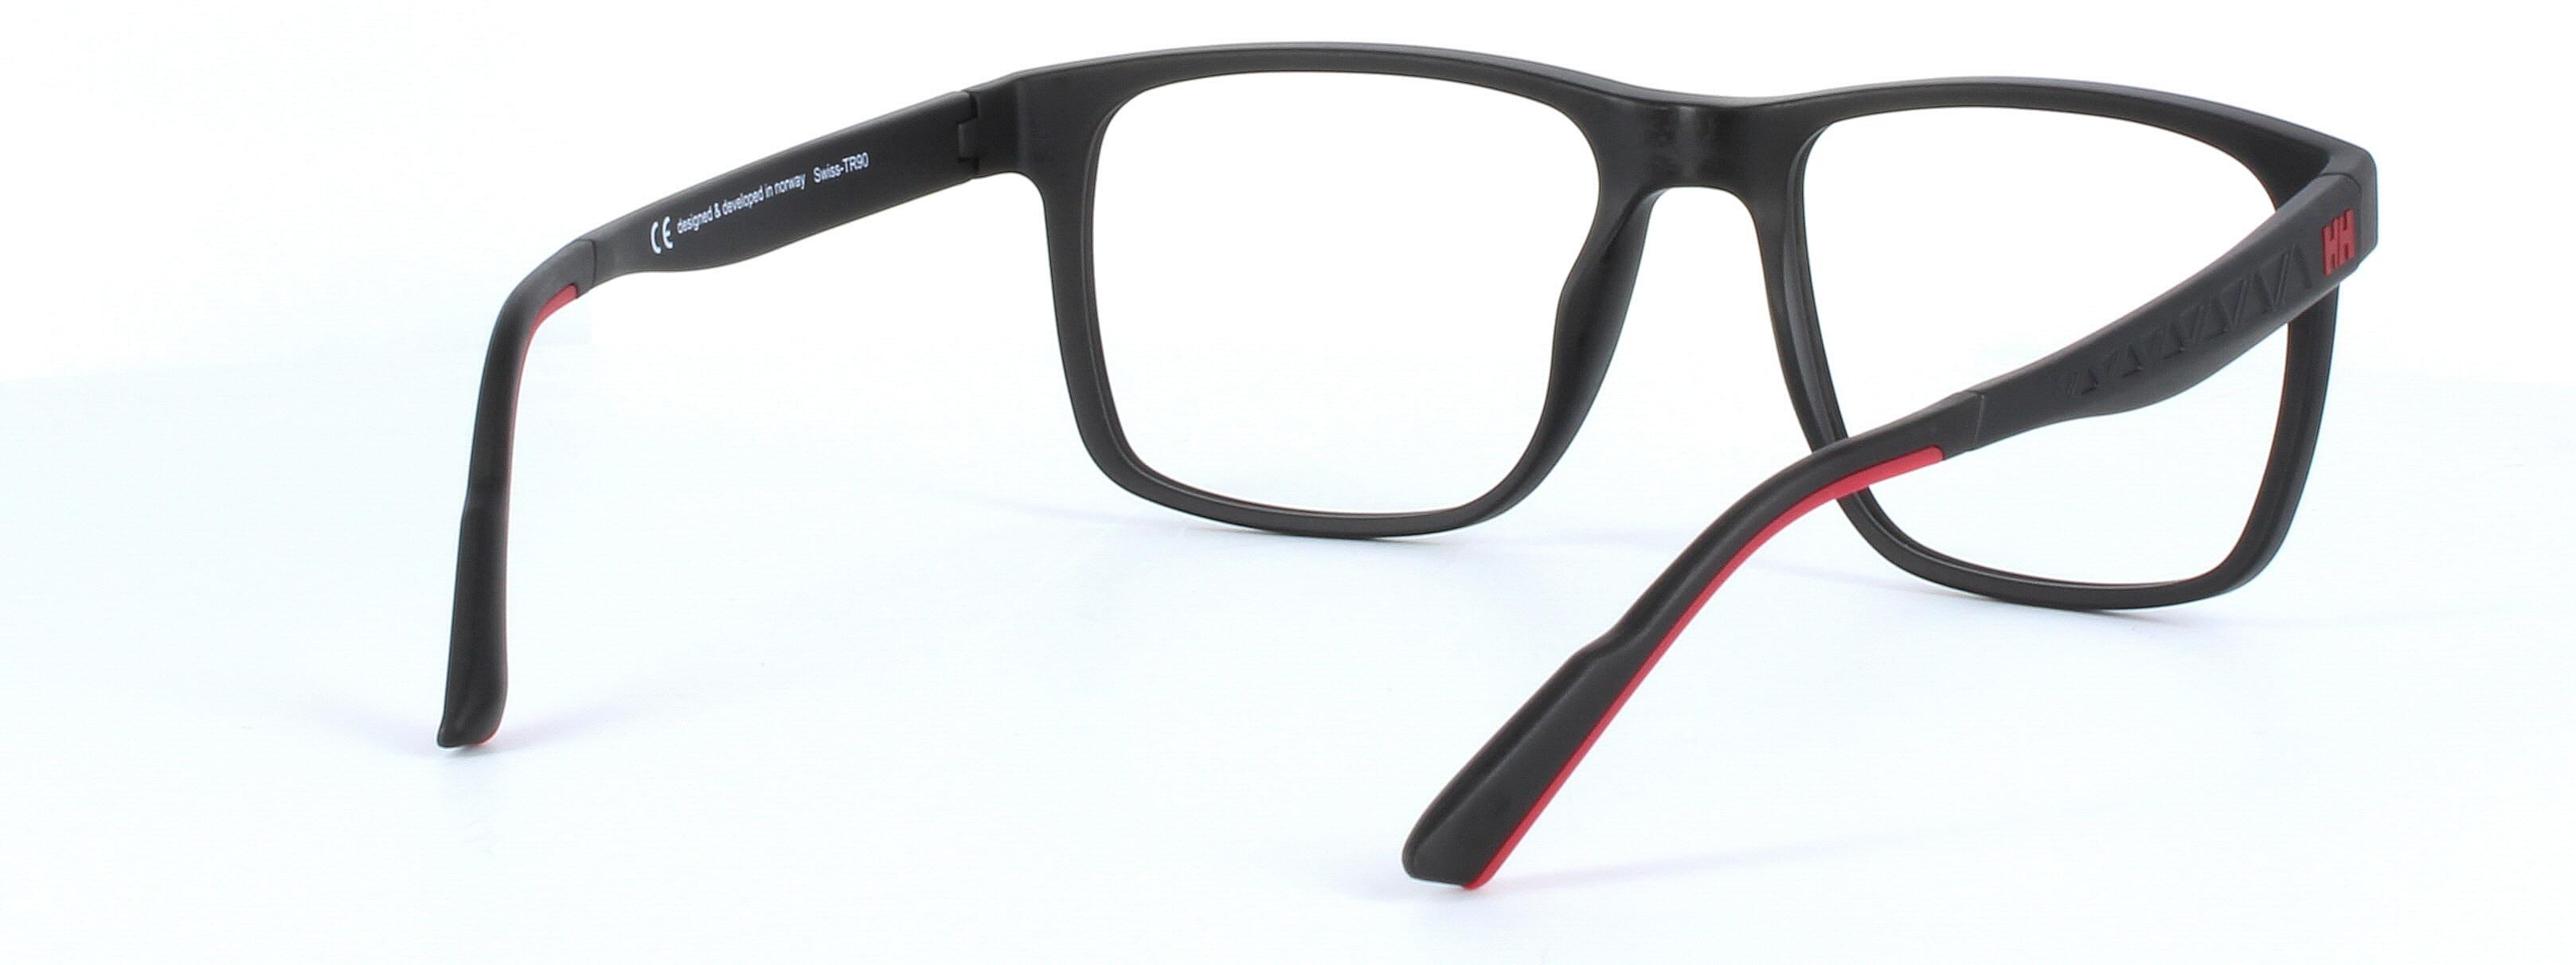 Helly Hansen 1064 - Lightweight (TR90 material) black gents full rim glasses - image view 4